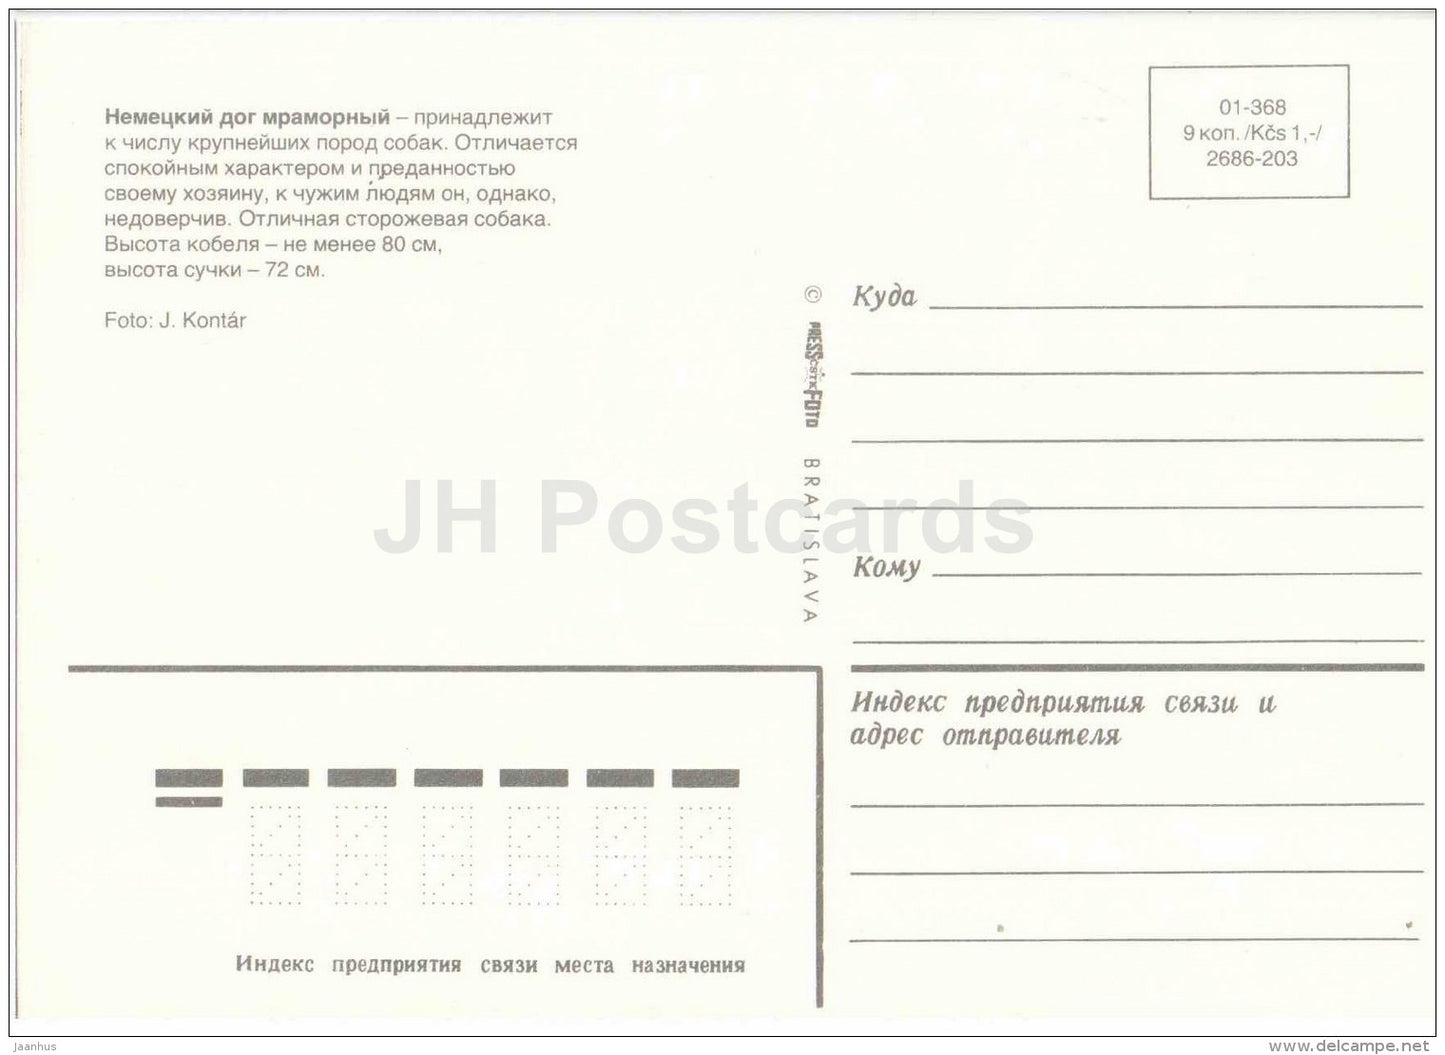 Great Dane - dog - Russia USSR - unused - JH Postcards